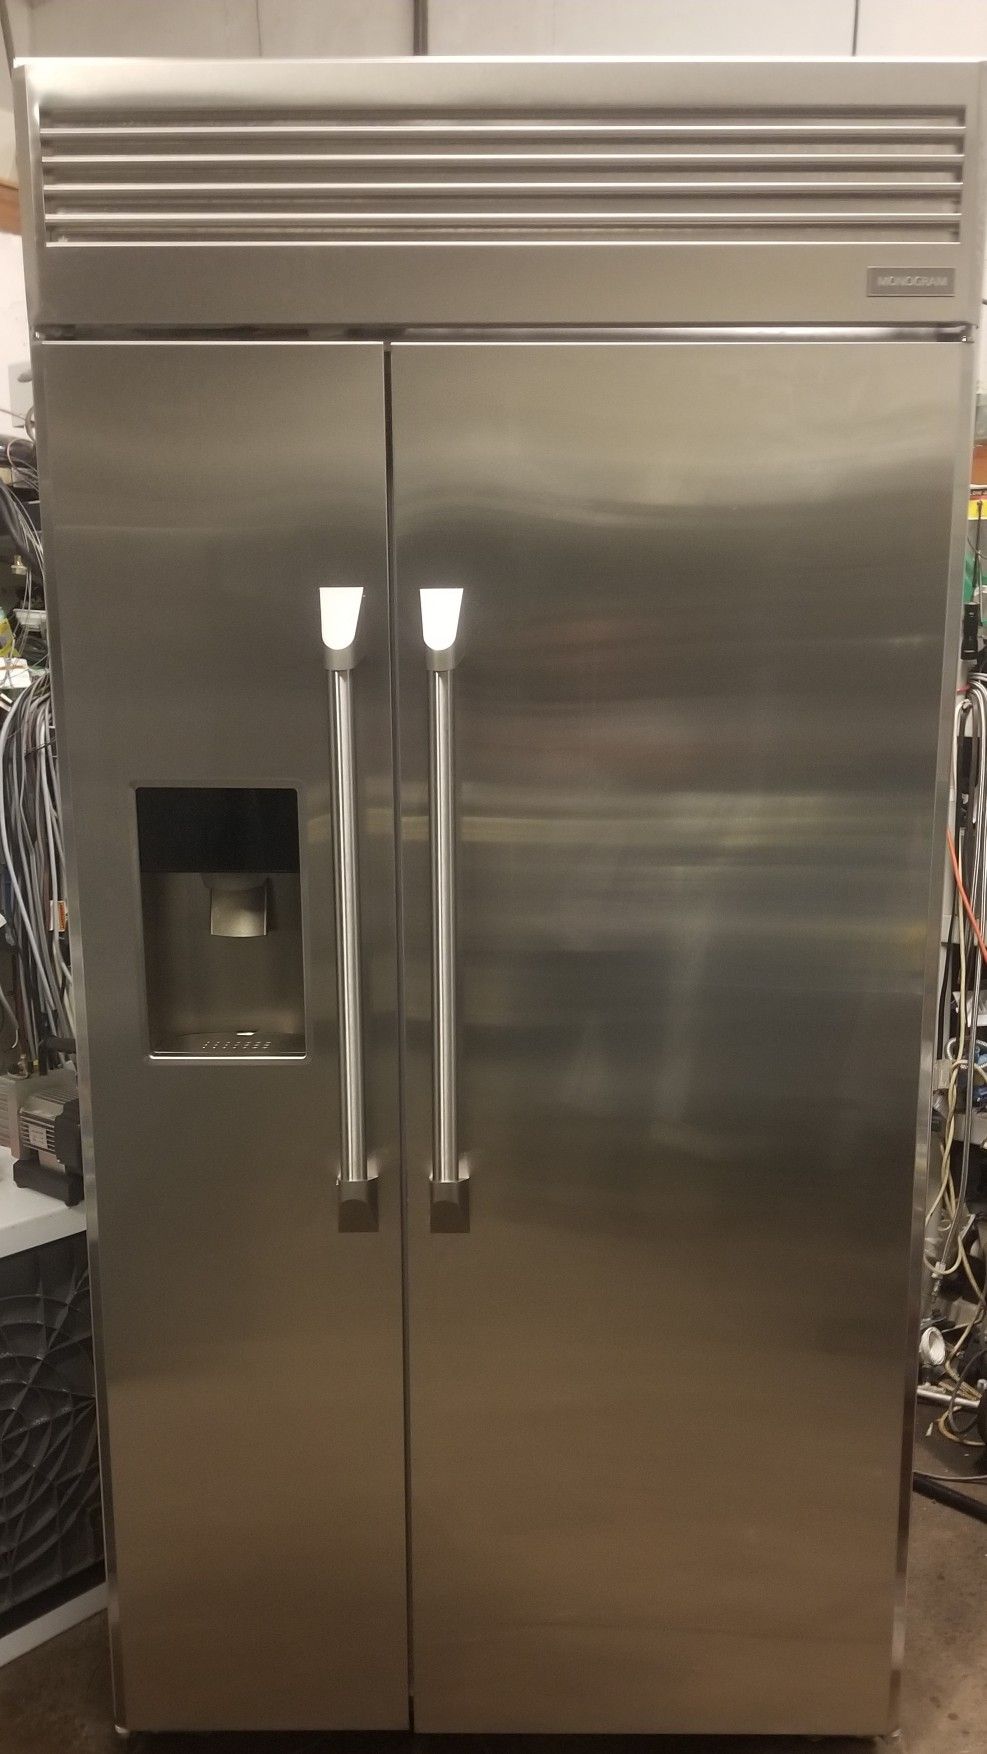 GE Monogram 42-inch built-in refrigerator